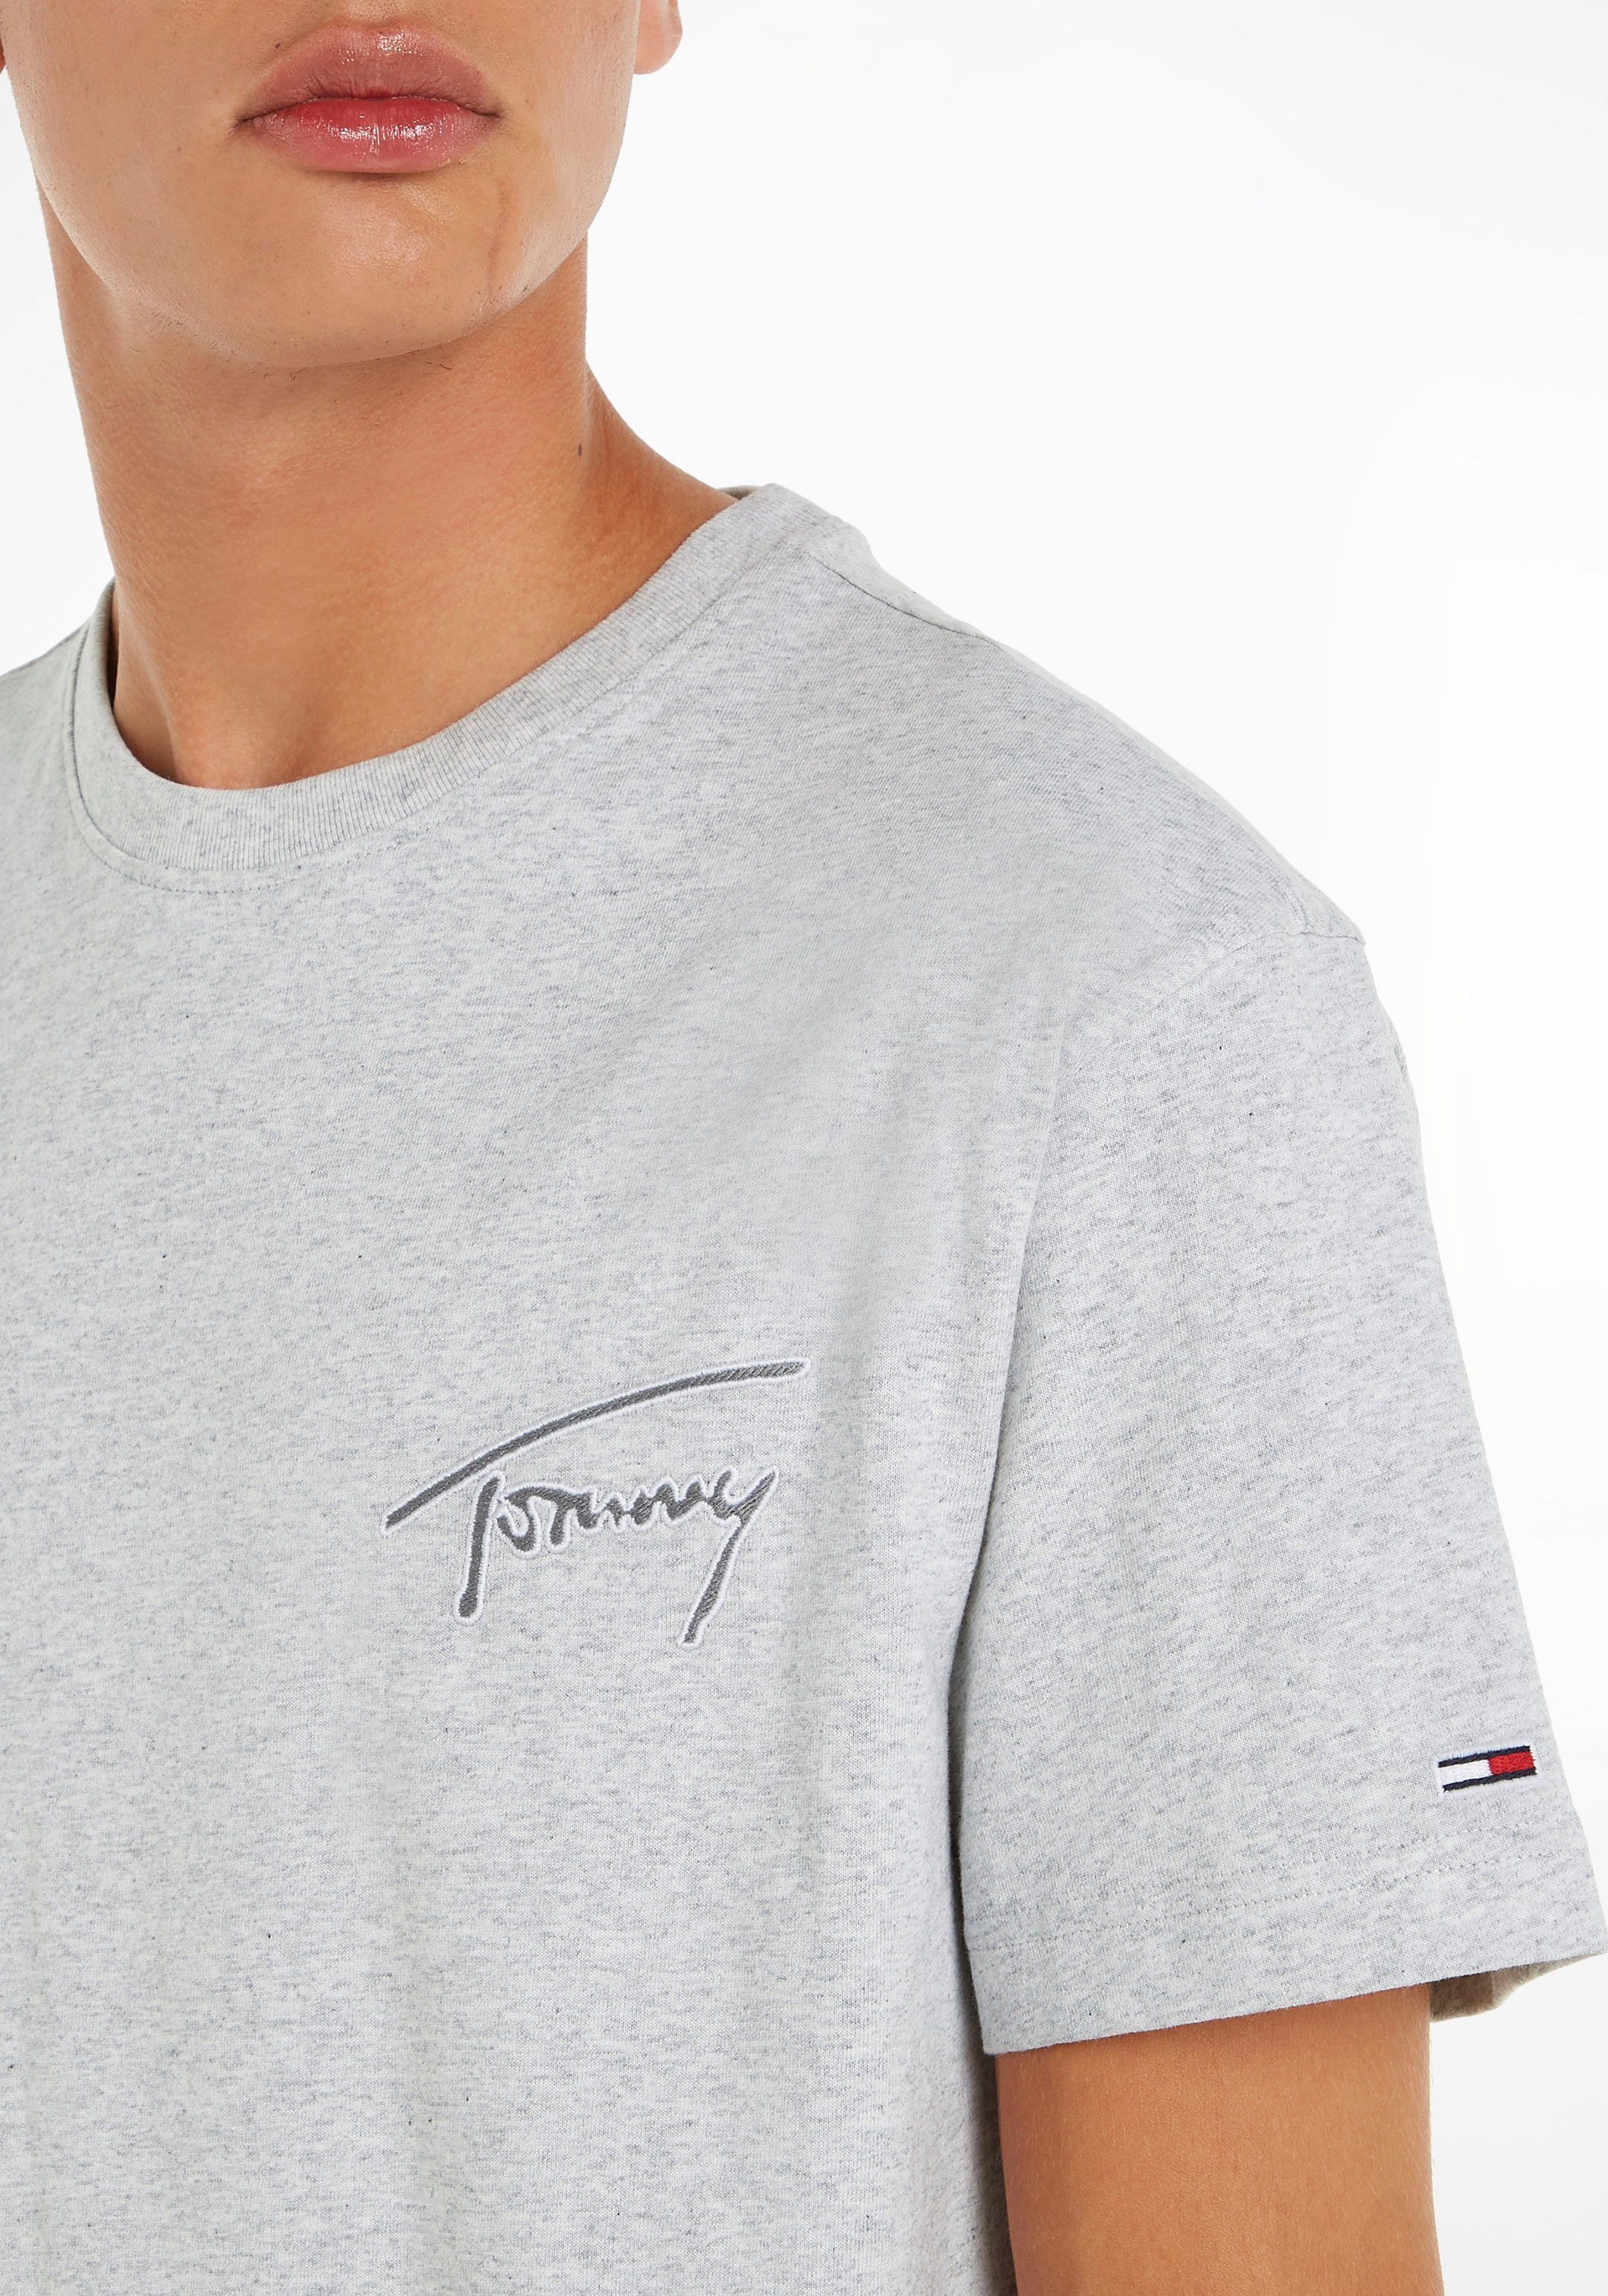 Tommy Jeans SIGNATURE SilverGreyHtr CLSC T-Shirt TJM mit Rundhalsausschnitt TEE